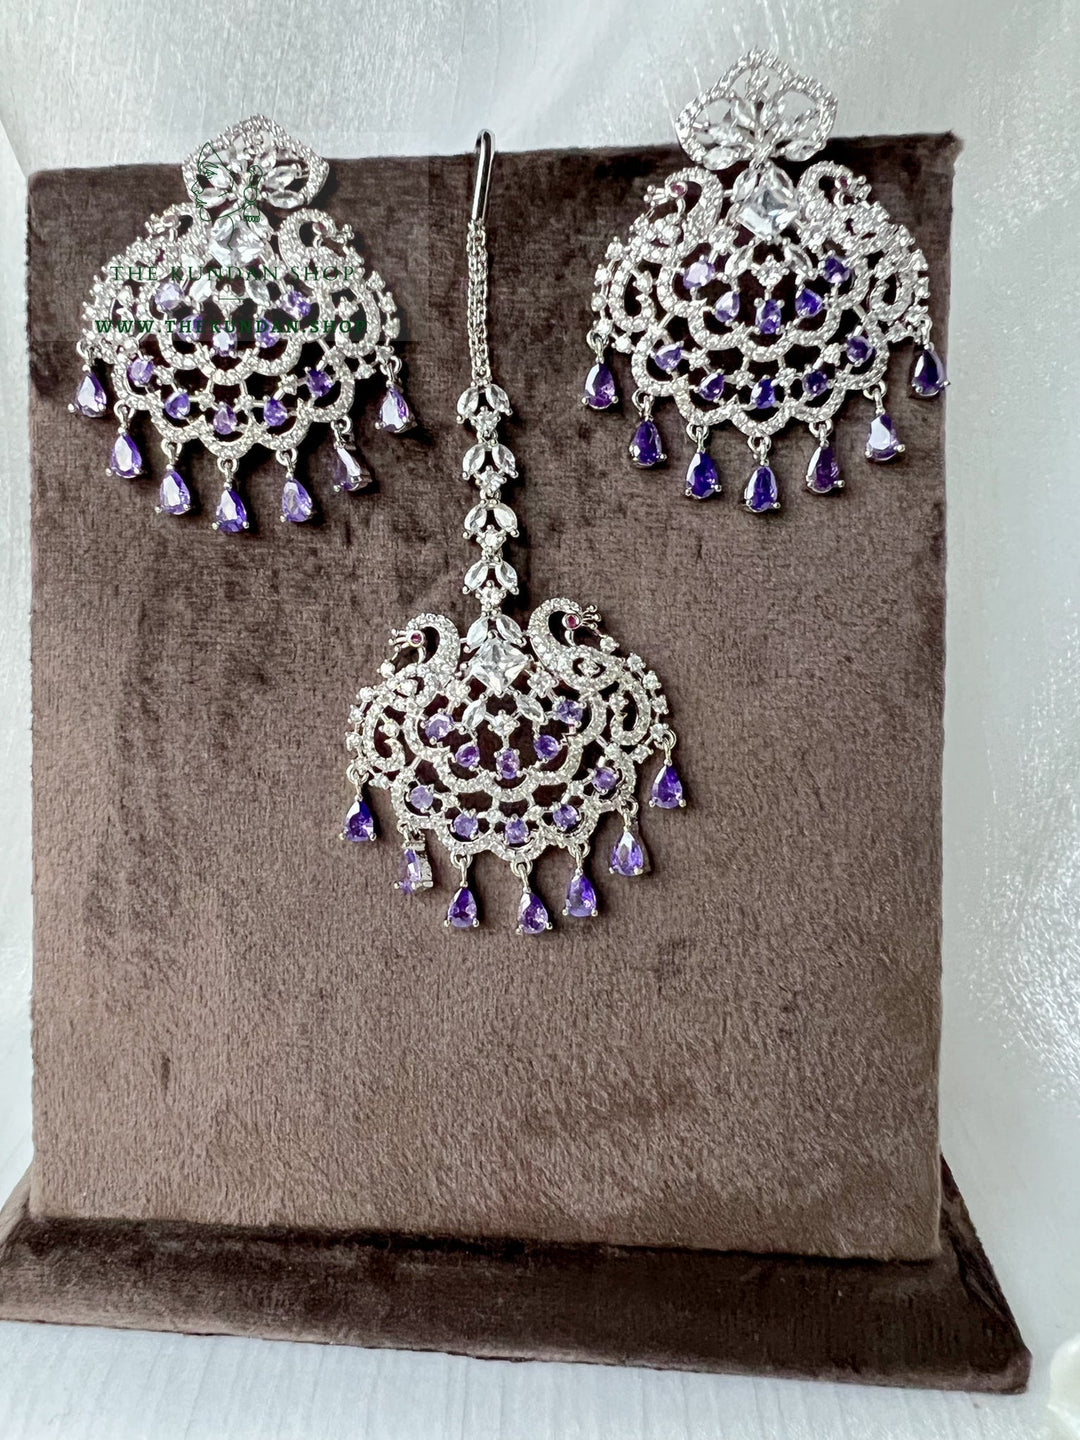 Serenity in Silver & Lavender Earrings + Tikka THE KUNDAN SHOP 